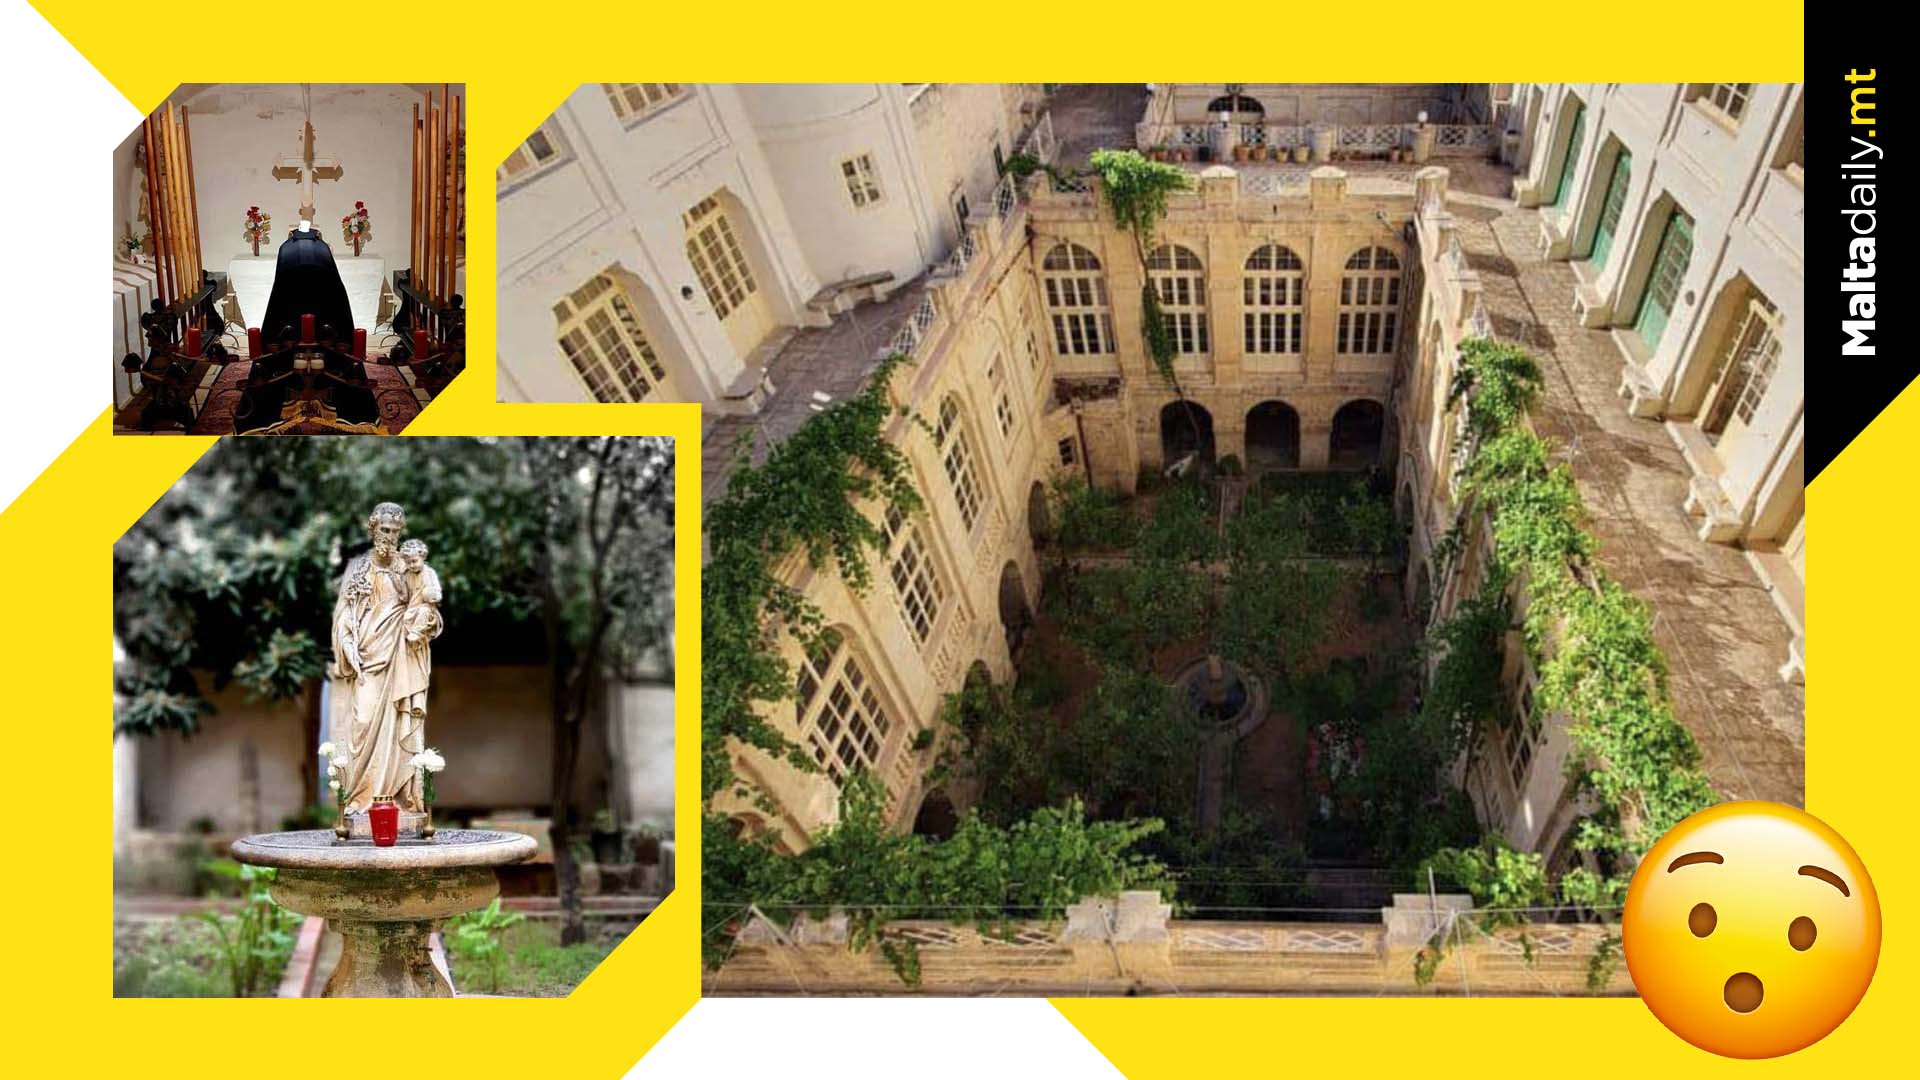 Secret Valletta garden opens up as public museum after 400 years